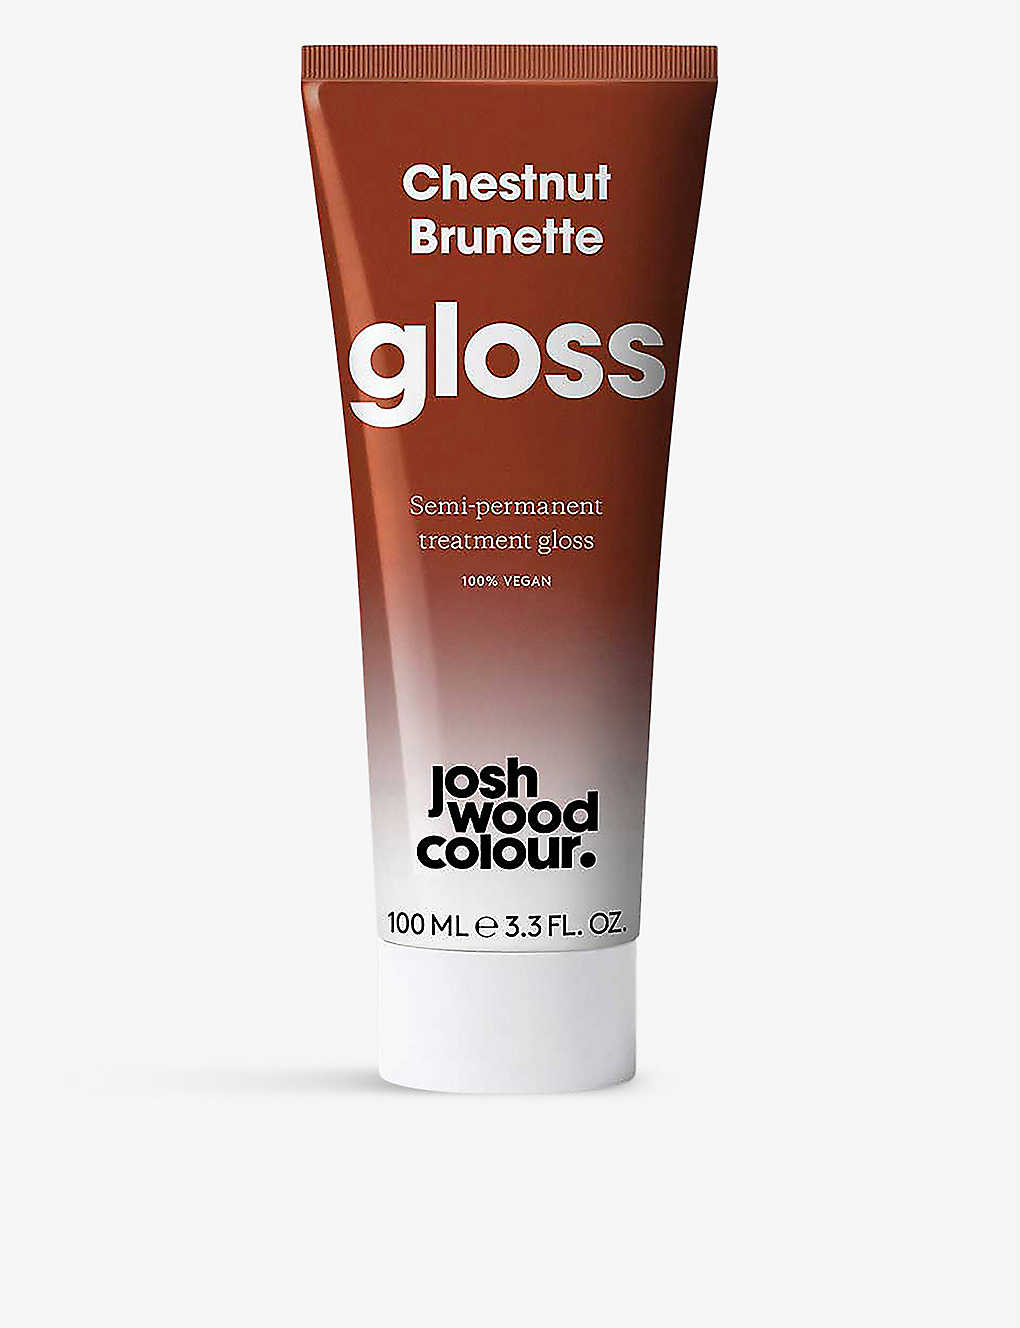 Josh Wood Colour Treatment Gloss Semi-permanent Colour 100ml In Chestnut Brunette